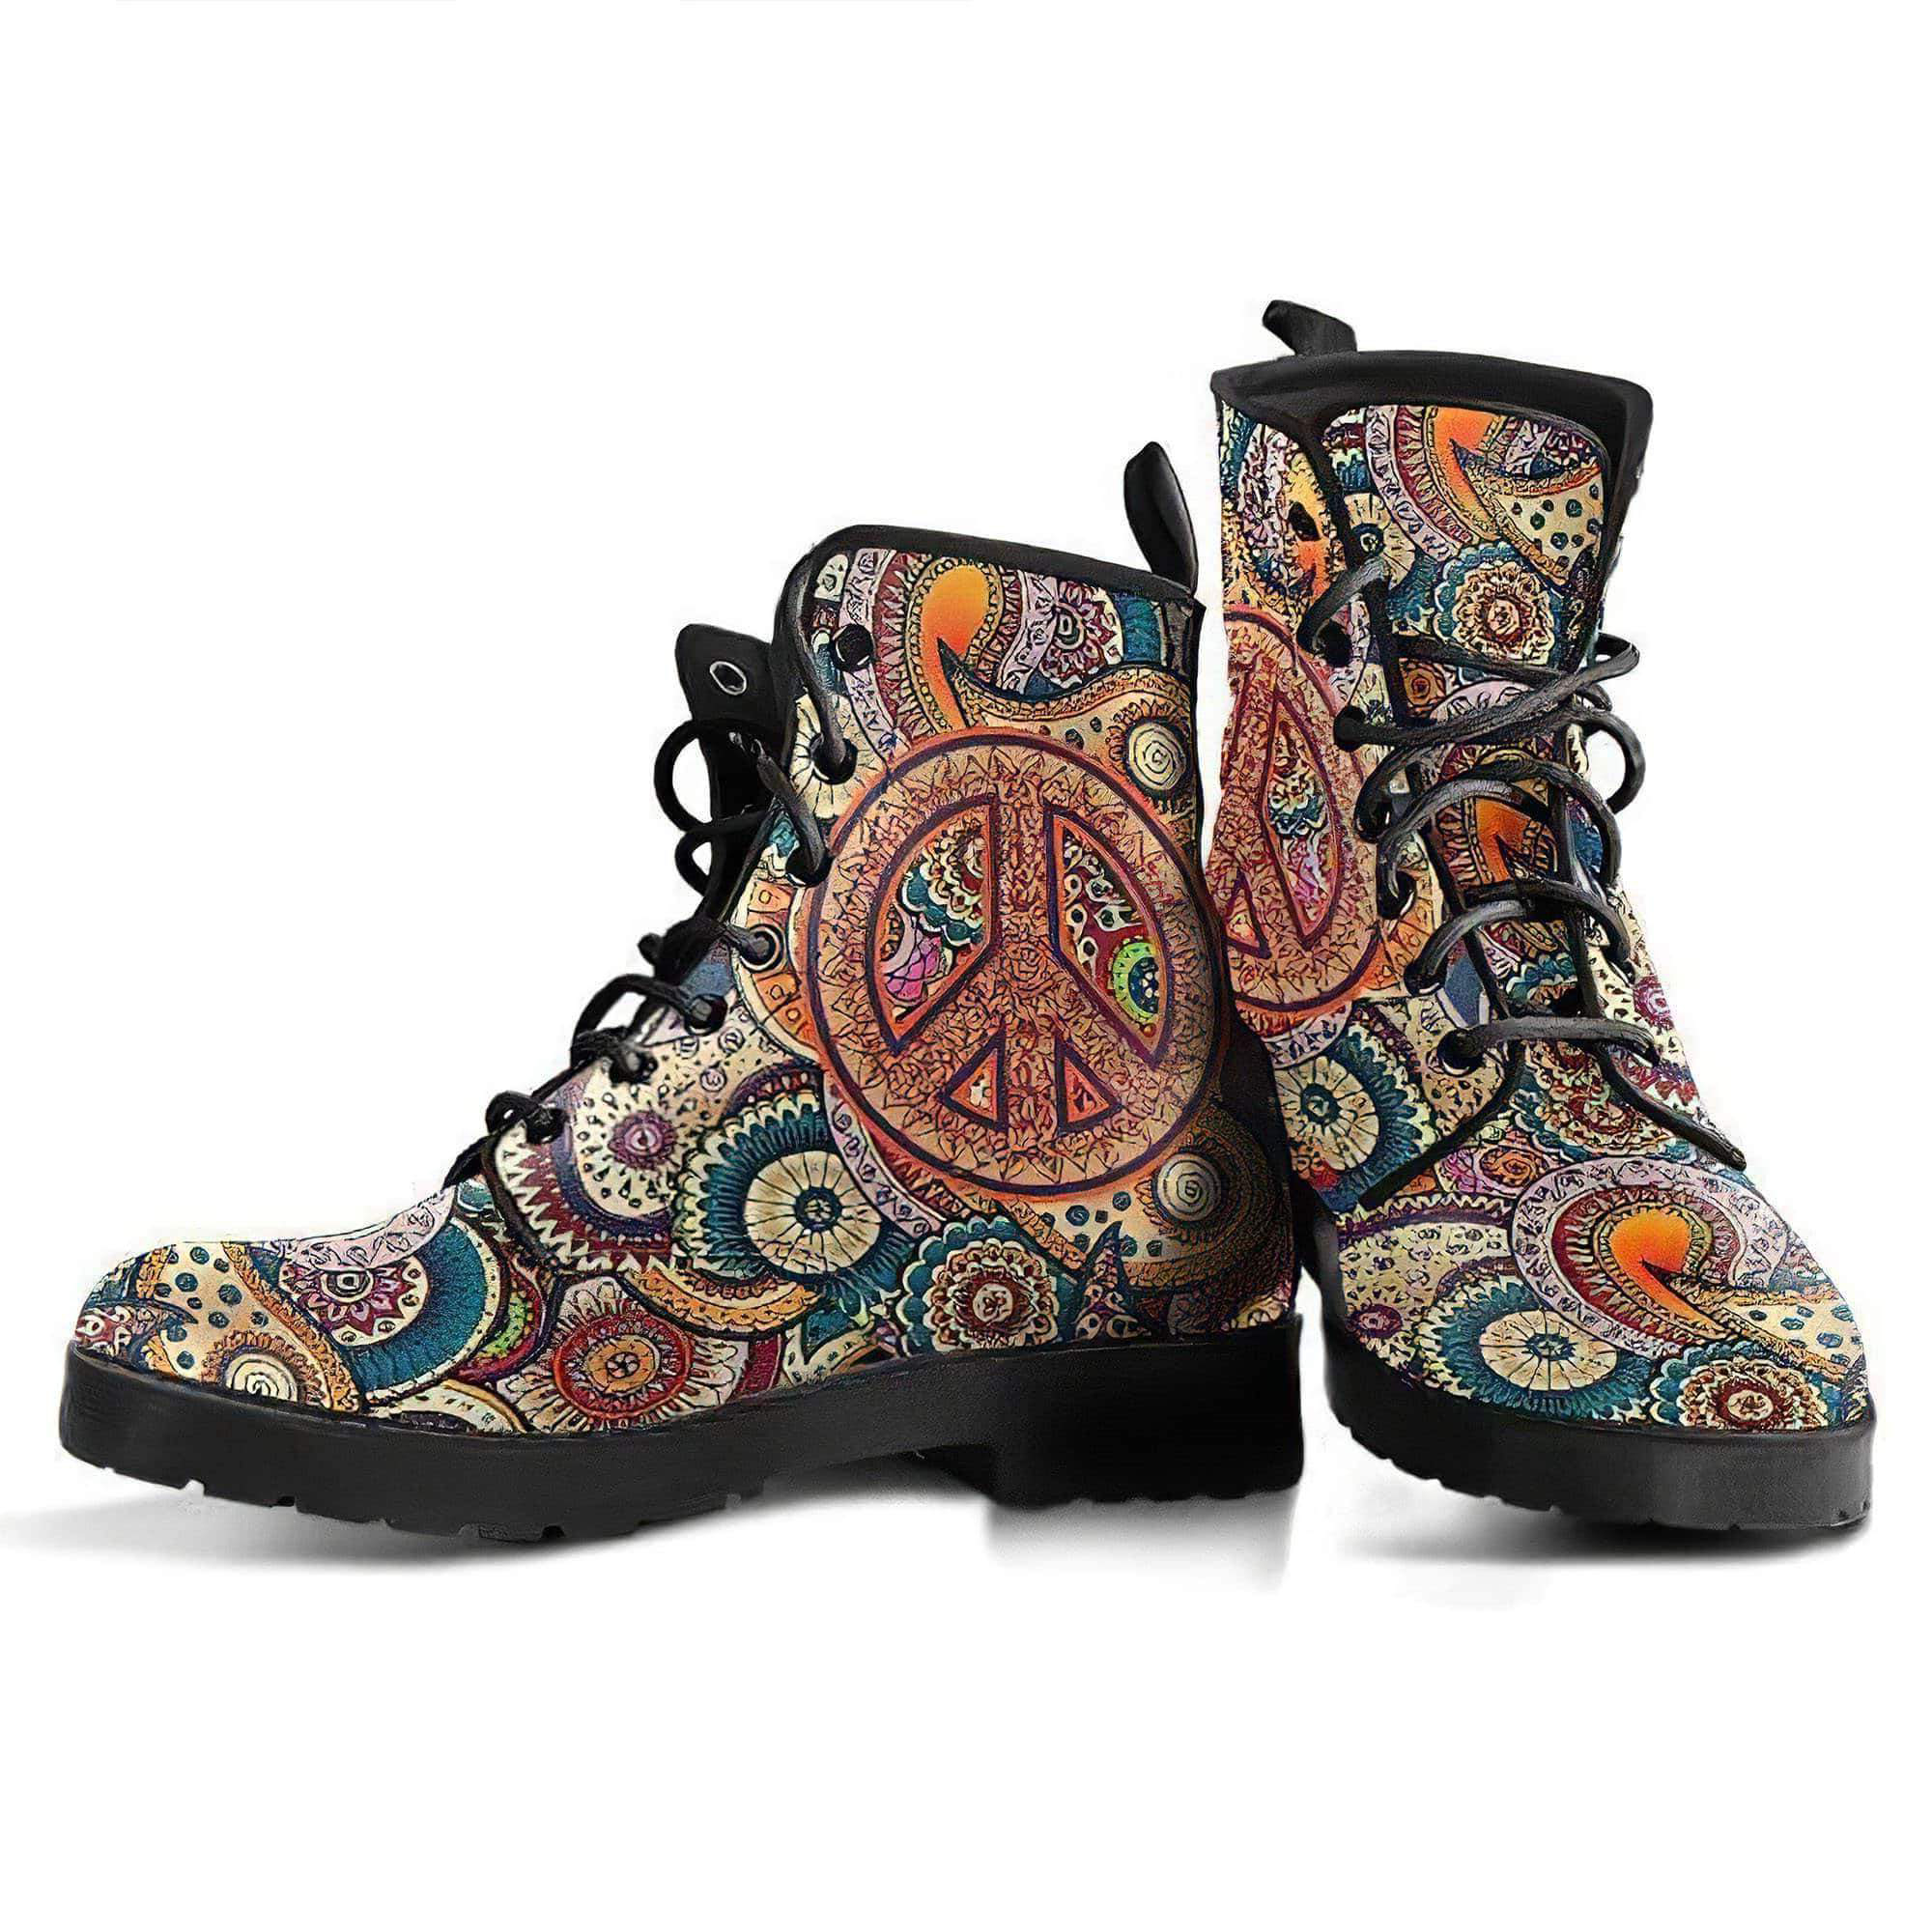 peace-henna-mandala-women-s-leather-boots-women-s-leather-boots-12054419308605.jpg